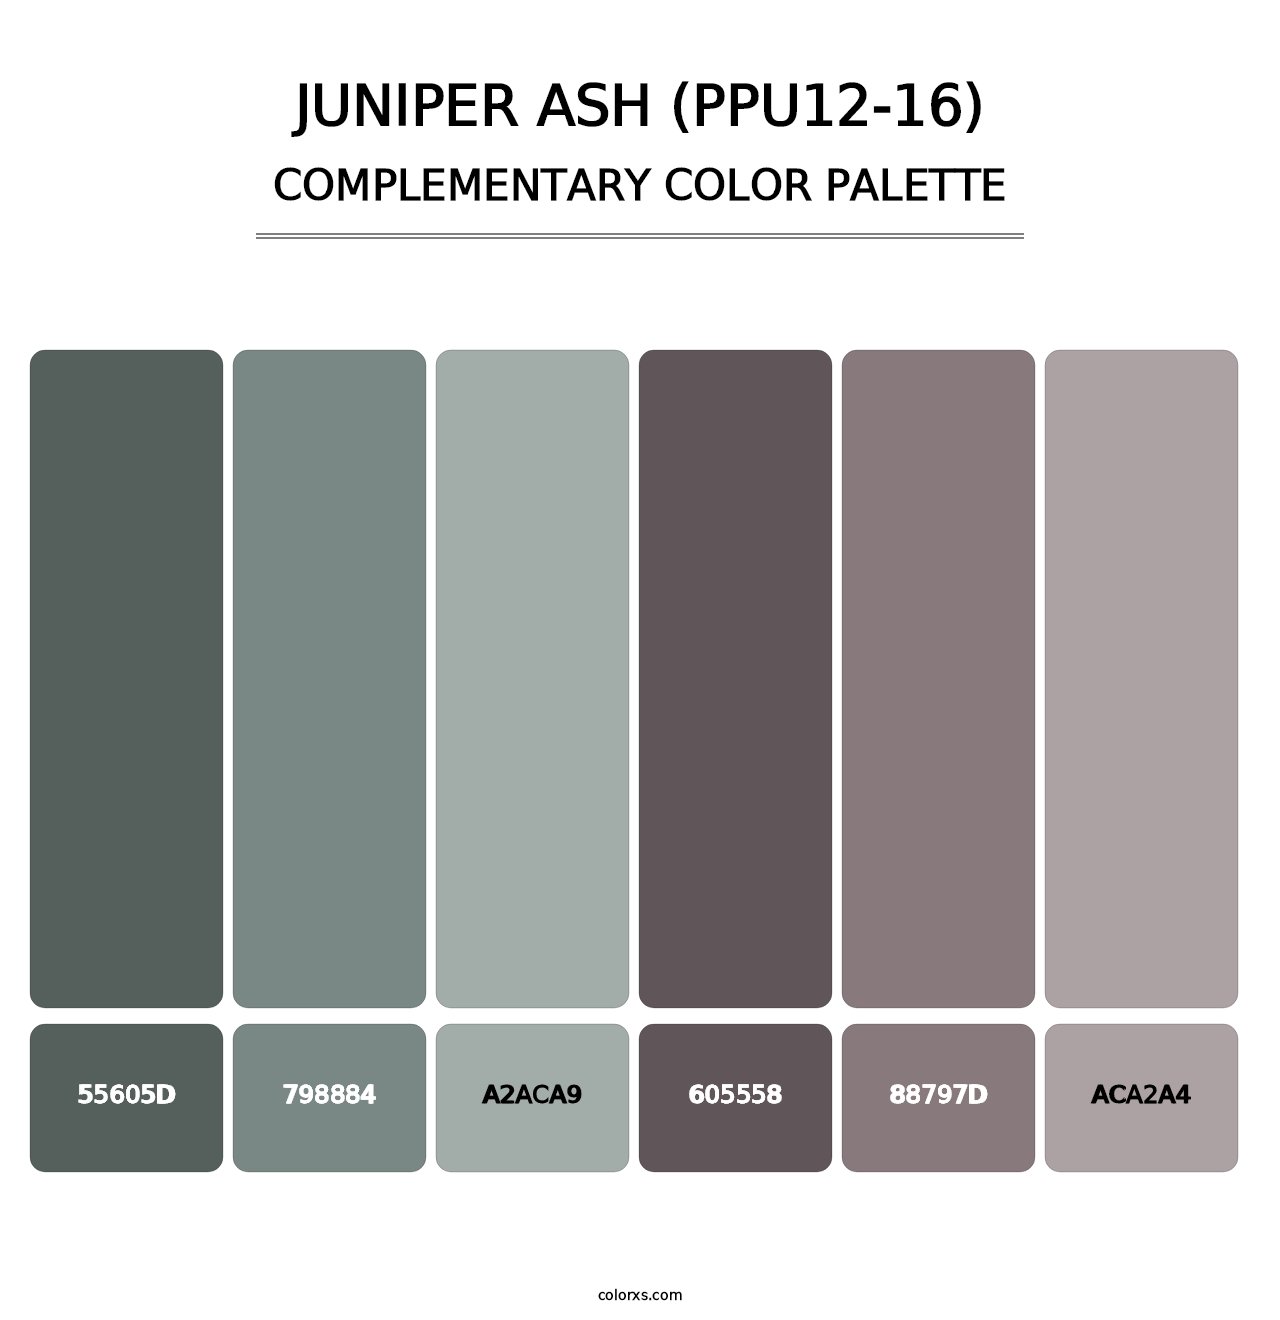 Juniper Ash (PPU12-16) - Complementary Color Palette